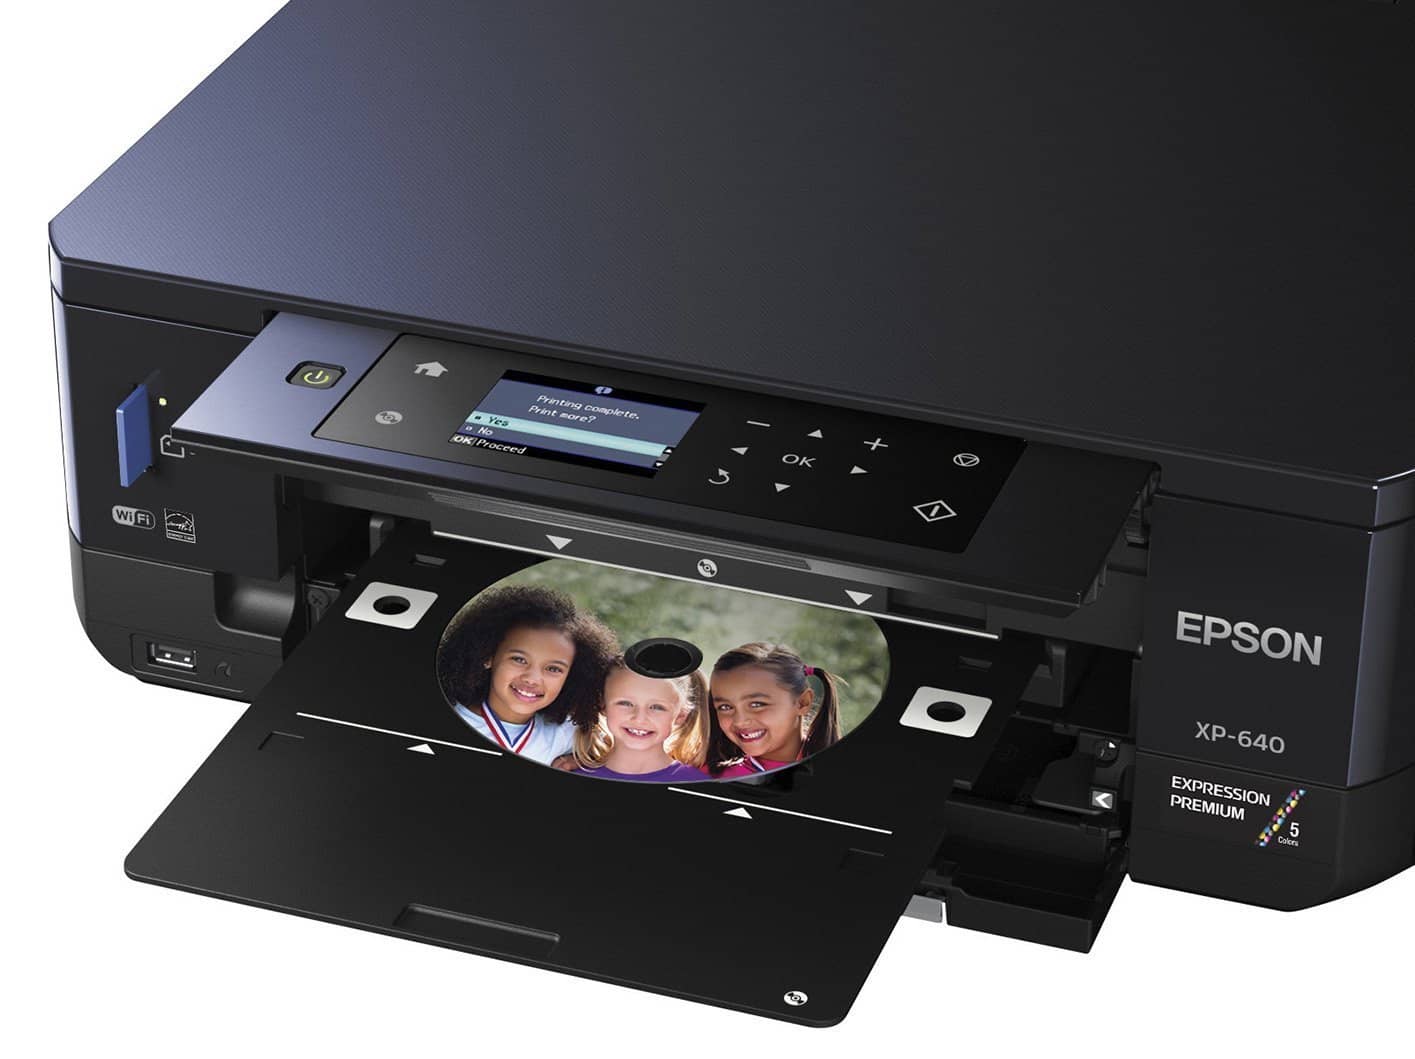 Epson XP-640 Wireless Color Photo Printer 2.7